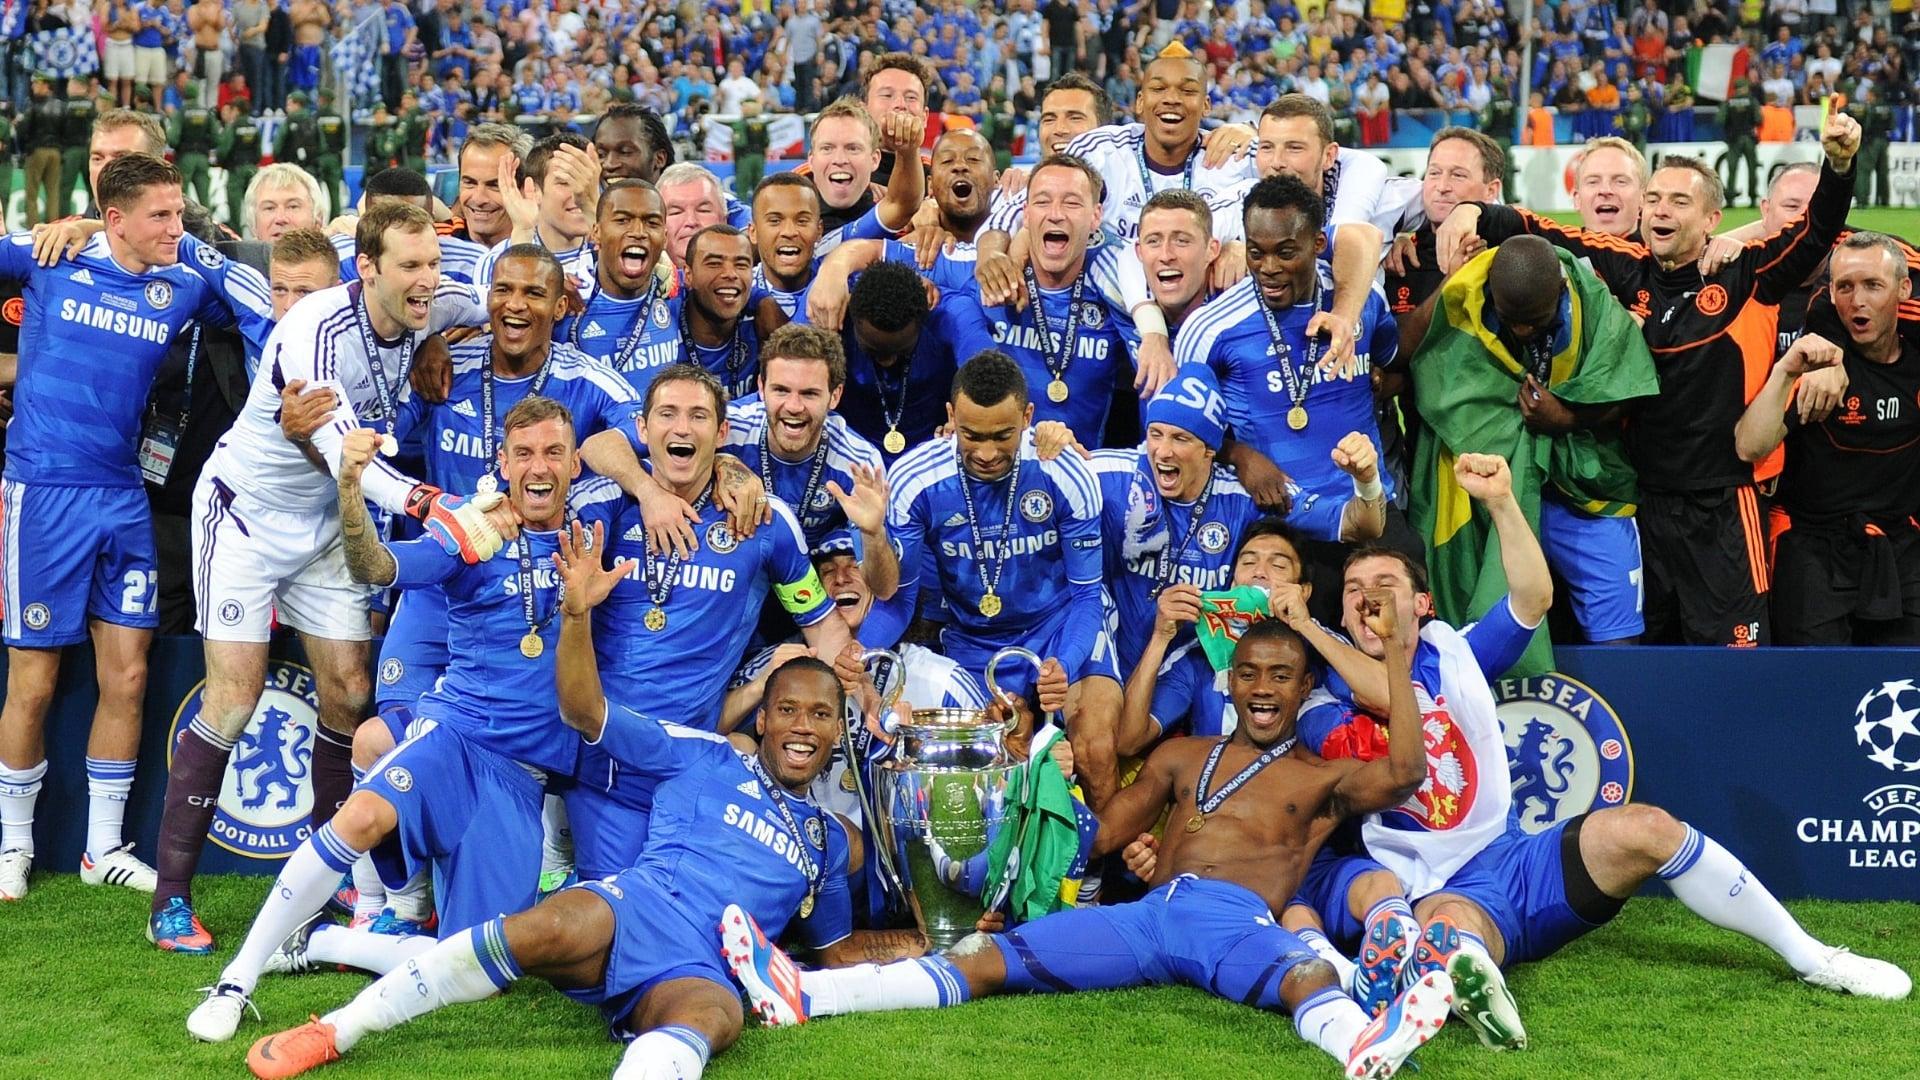 Chelsea FC - Season Review 2011/12 backdrop